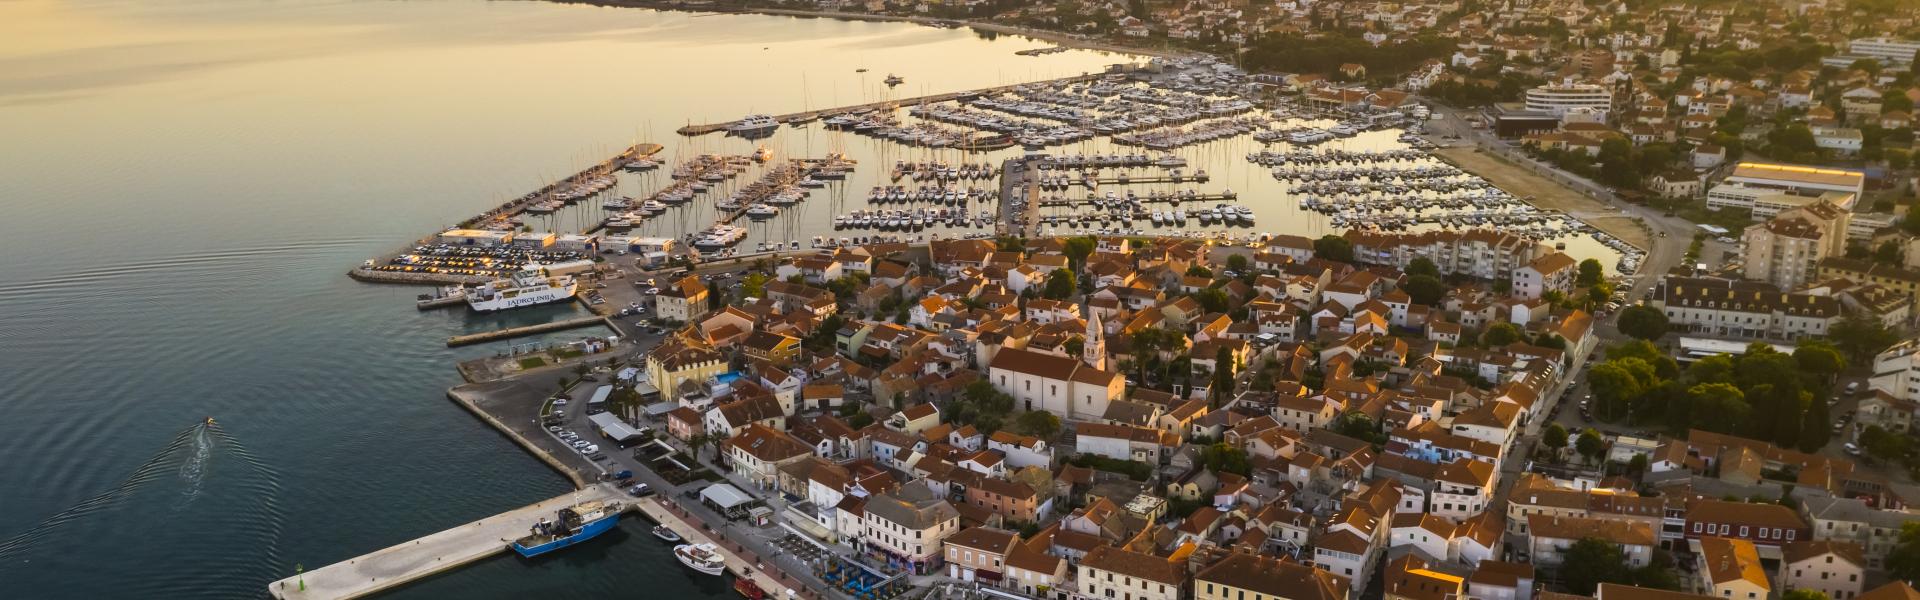 Croatia, beautiful old city of Biograd na Moru, panoramic view of the town center